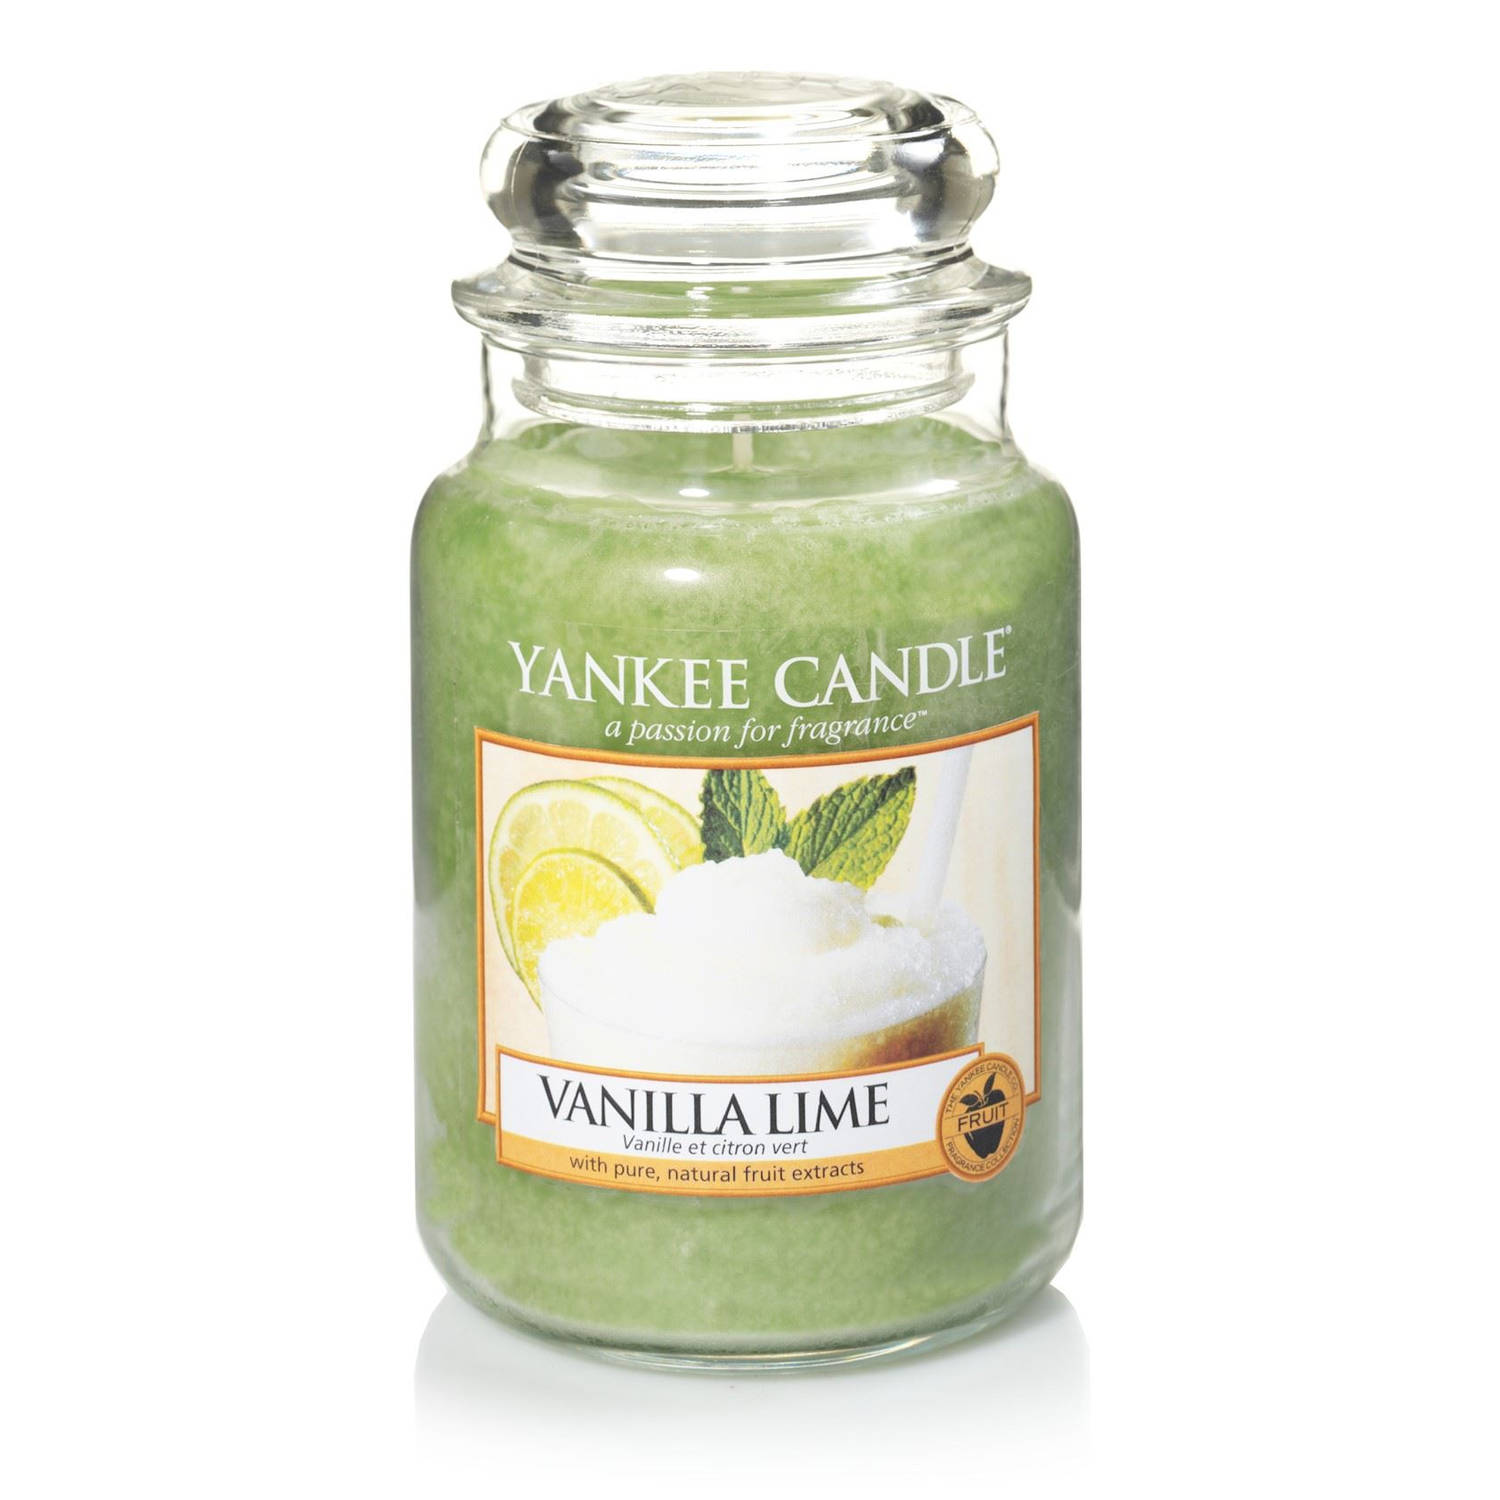 Yankee Candle Large Jar Vanilla Lime